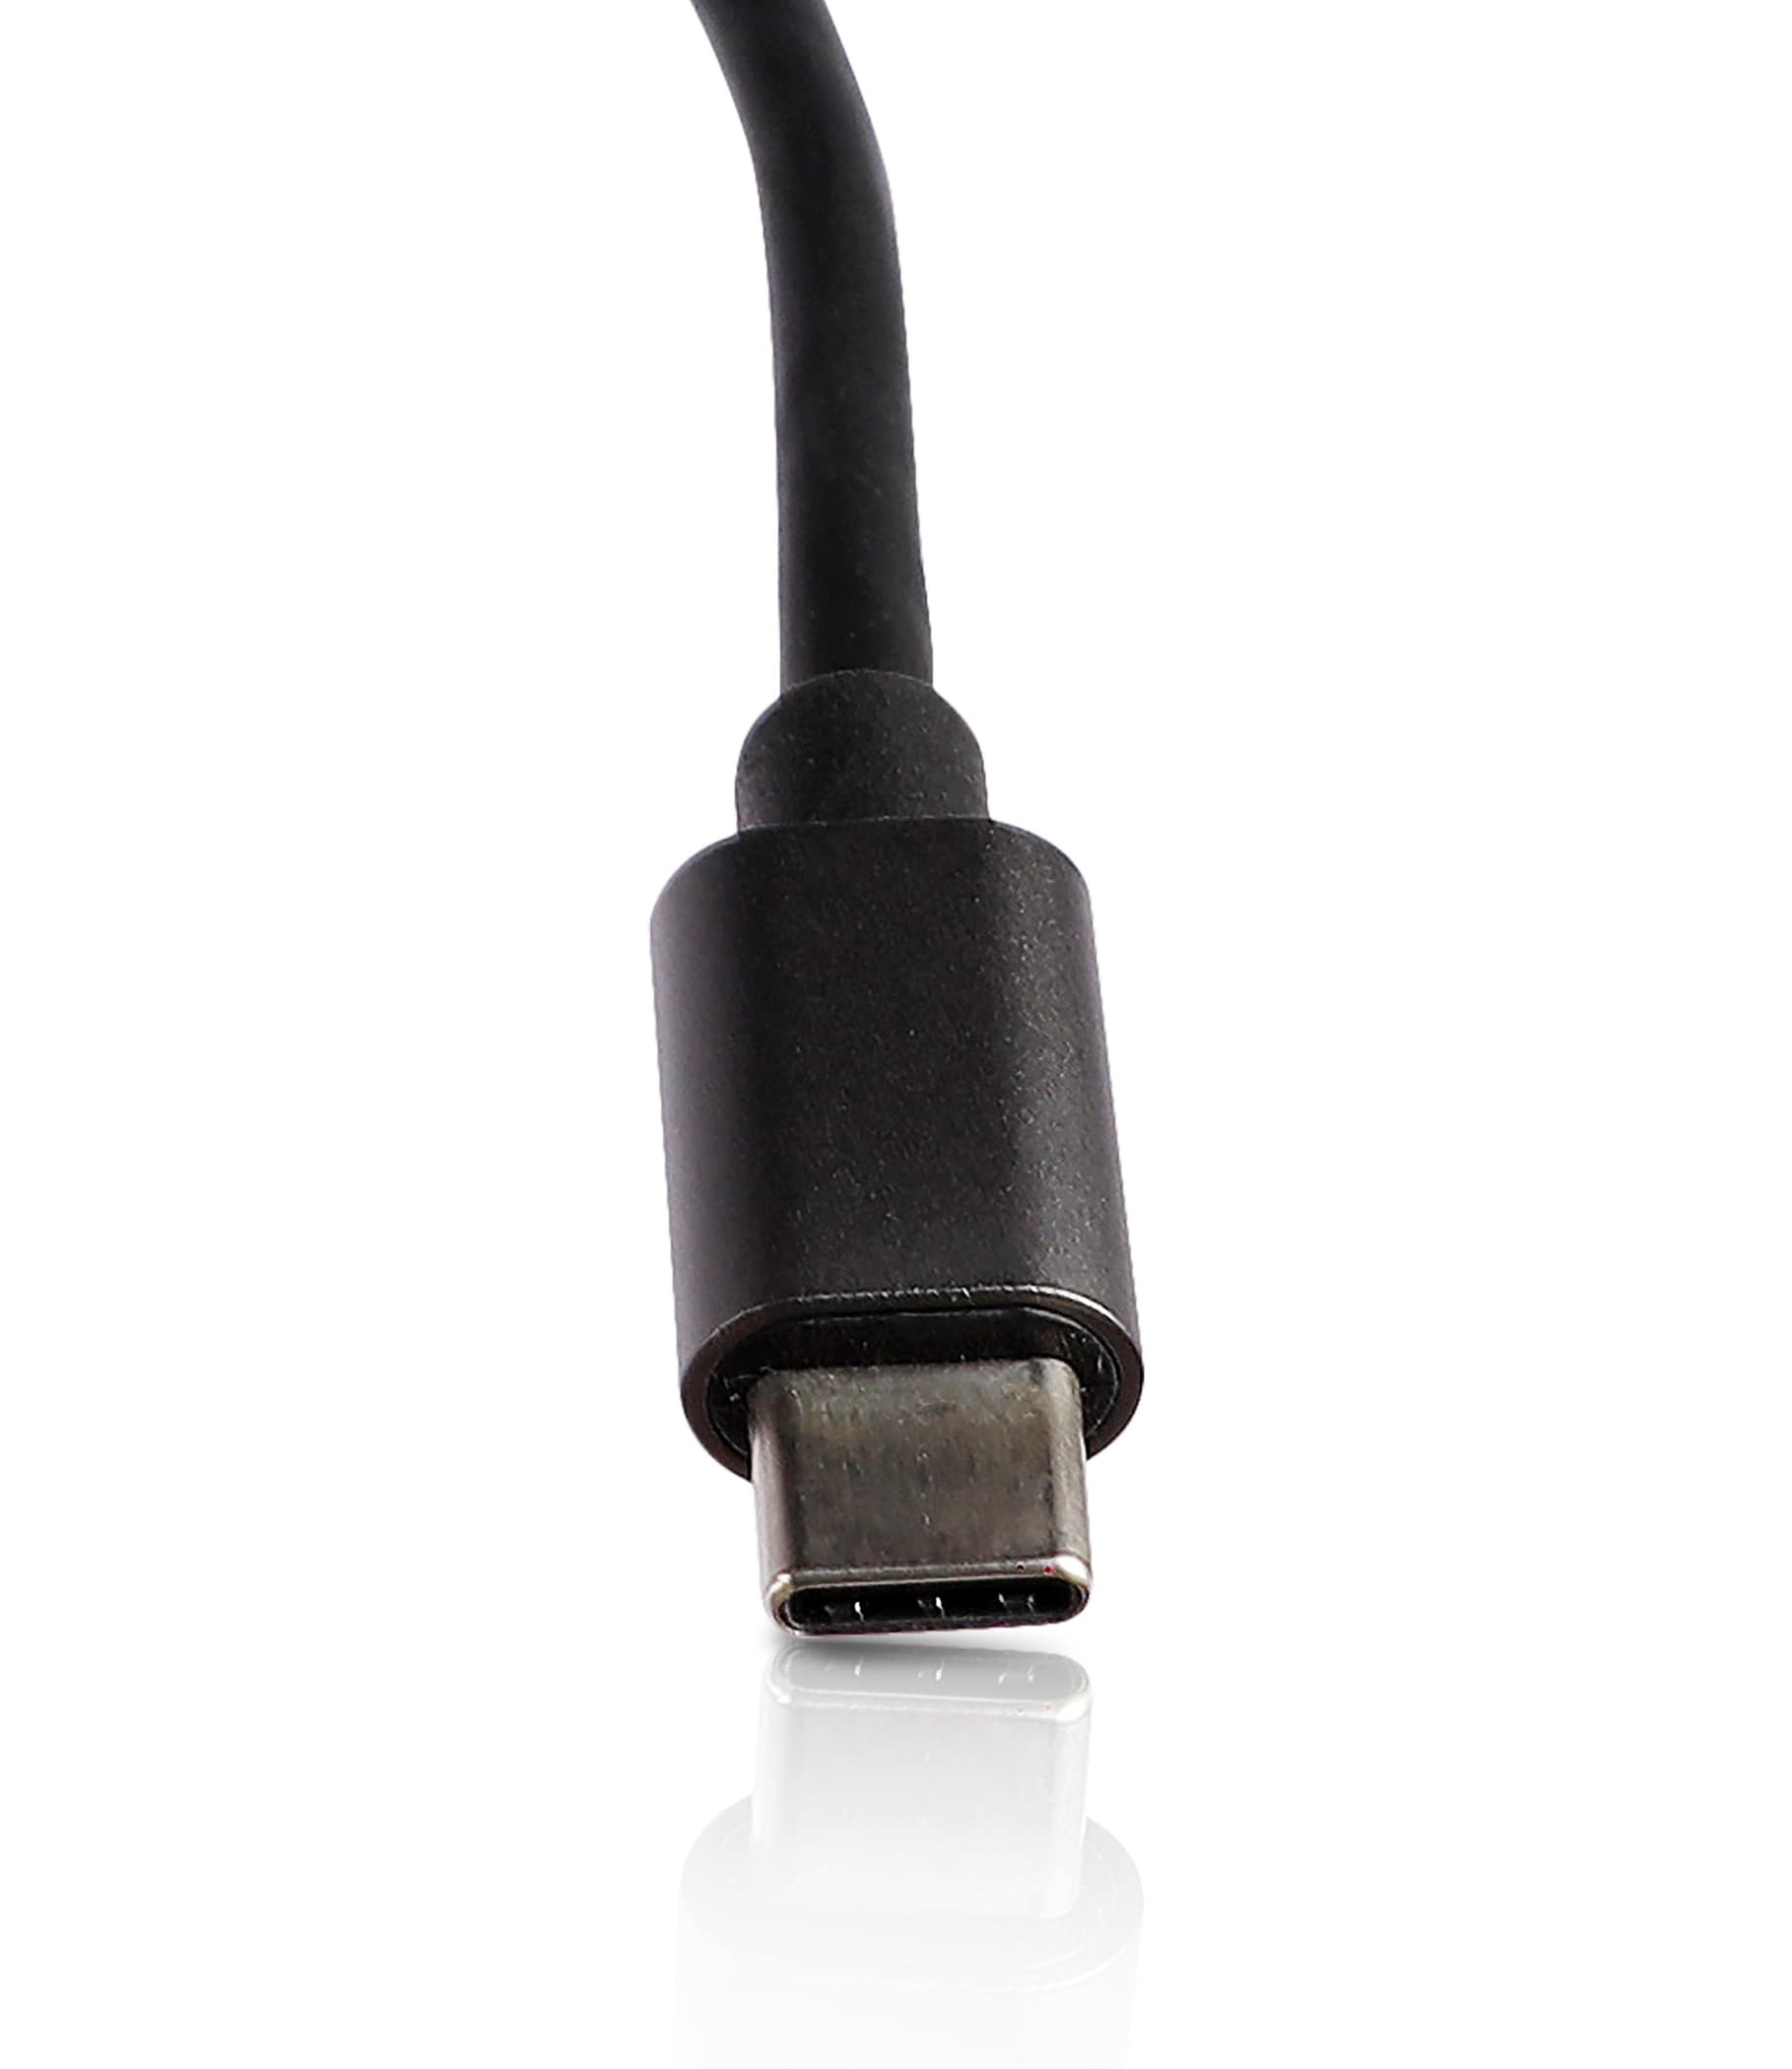 POWERX USB 3.1 TYPE C TO 4 PORT USB HUB